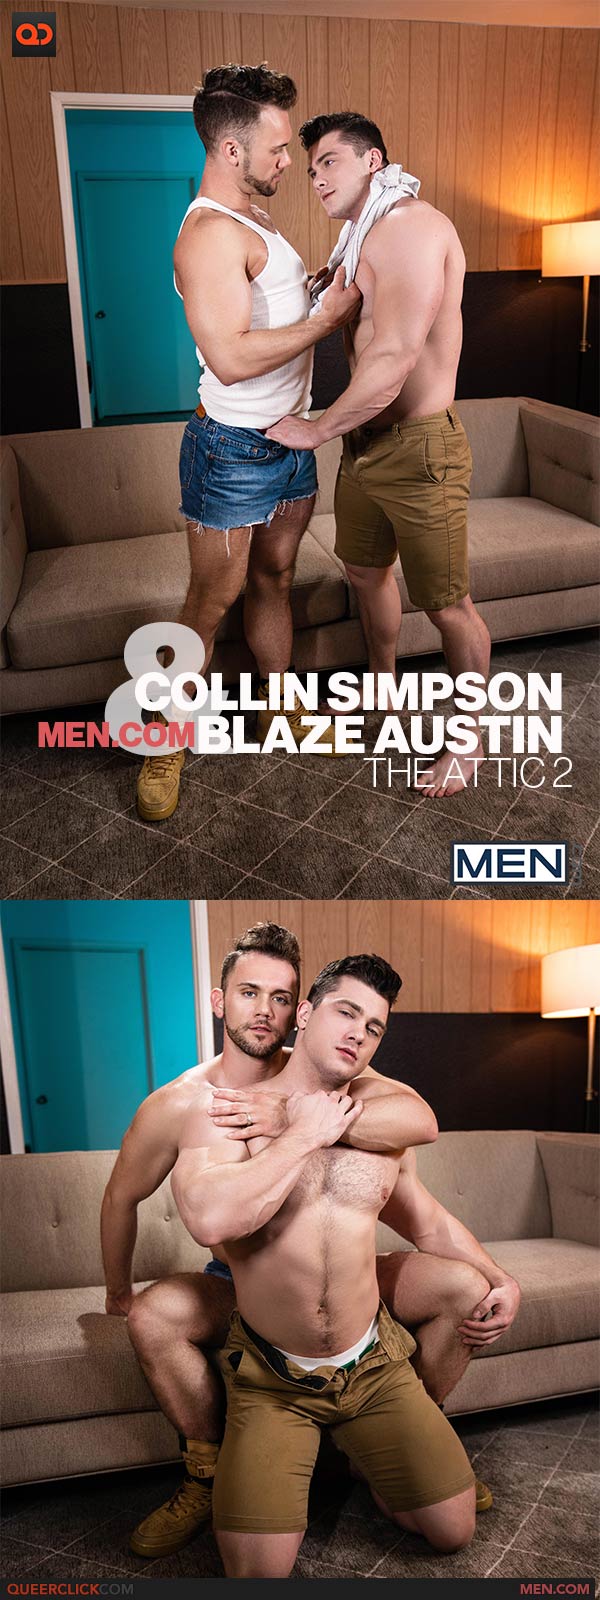 Men.com: Collin Simpson and Blaze Austin